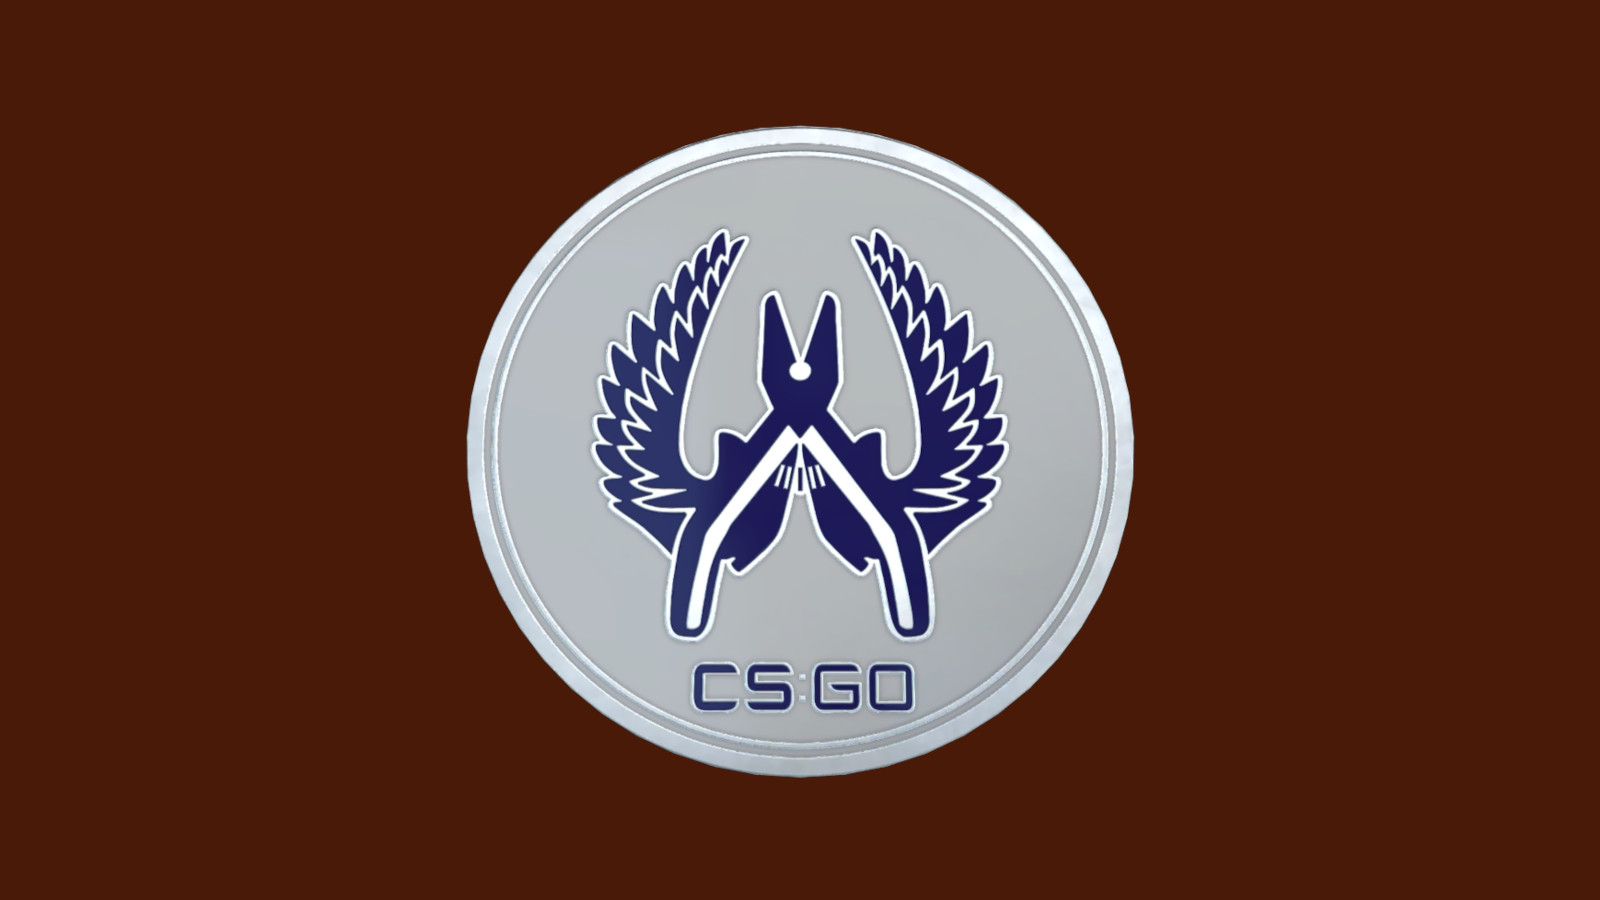 CS:GO - Series 3 - Guardian 3 Collectible Pin (225.98$)